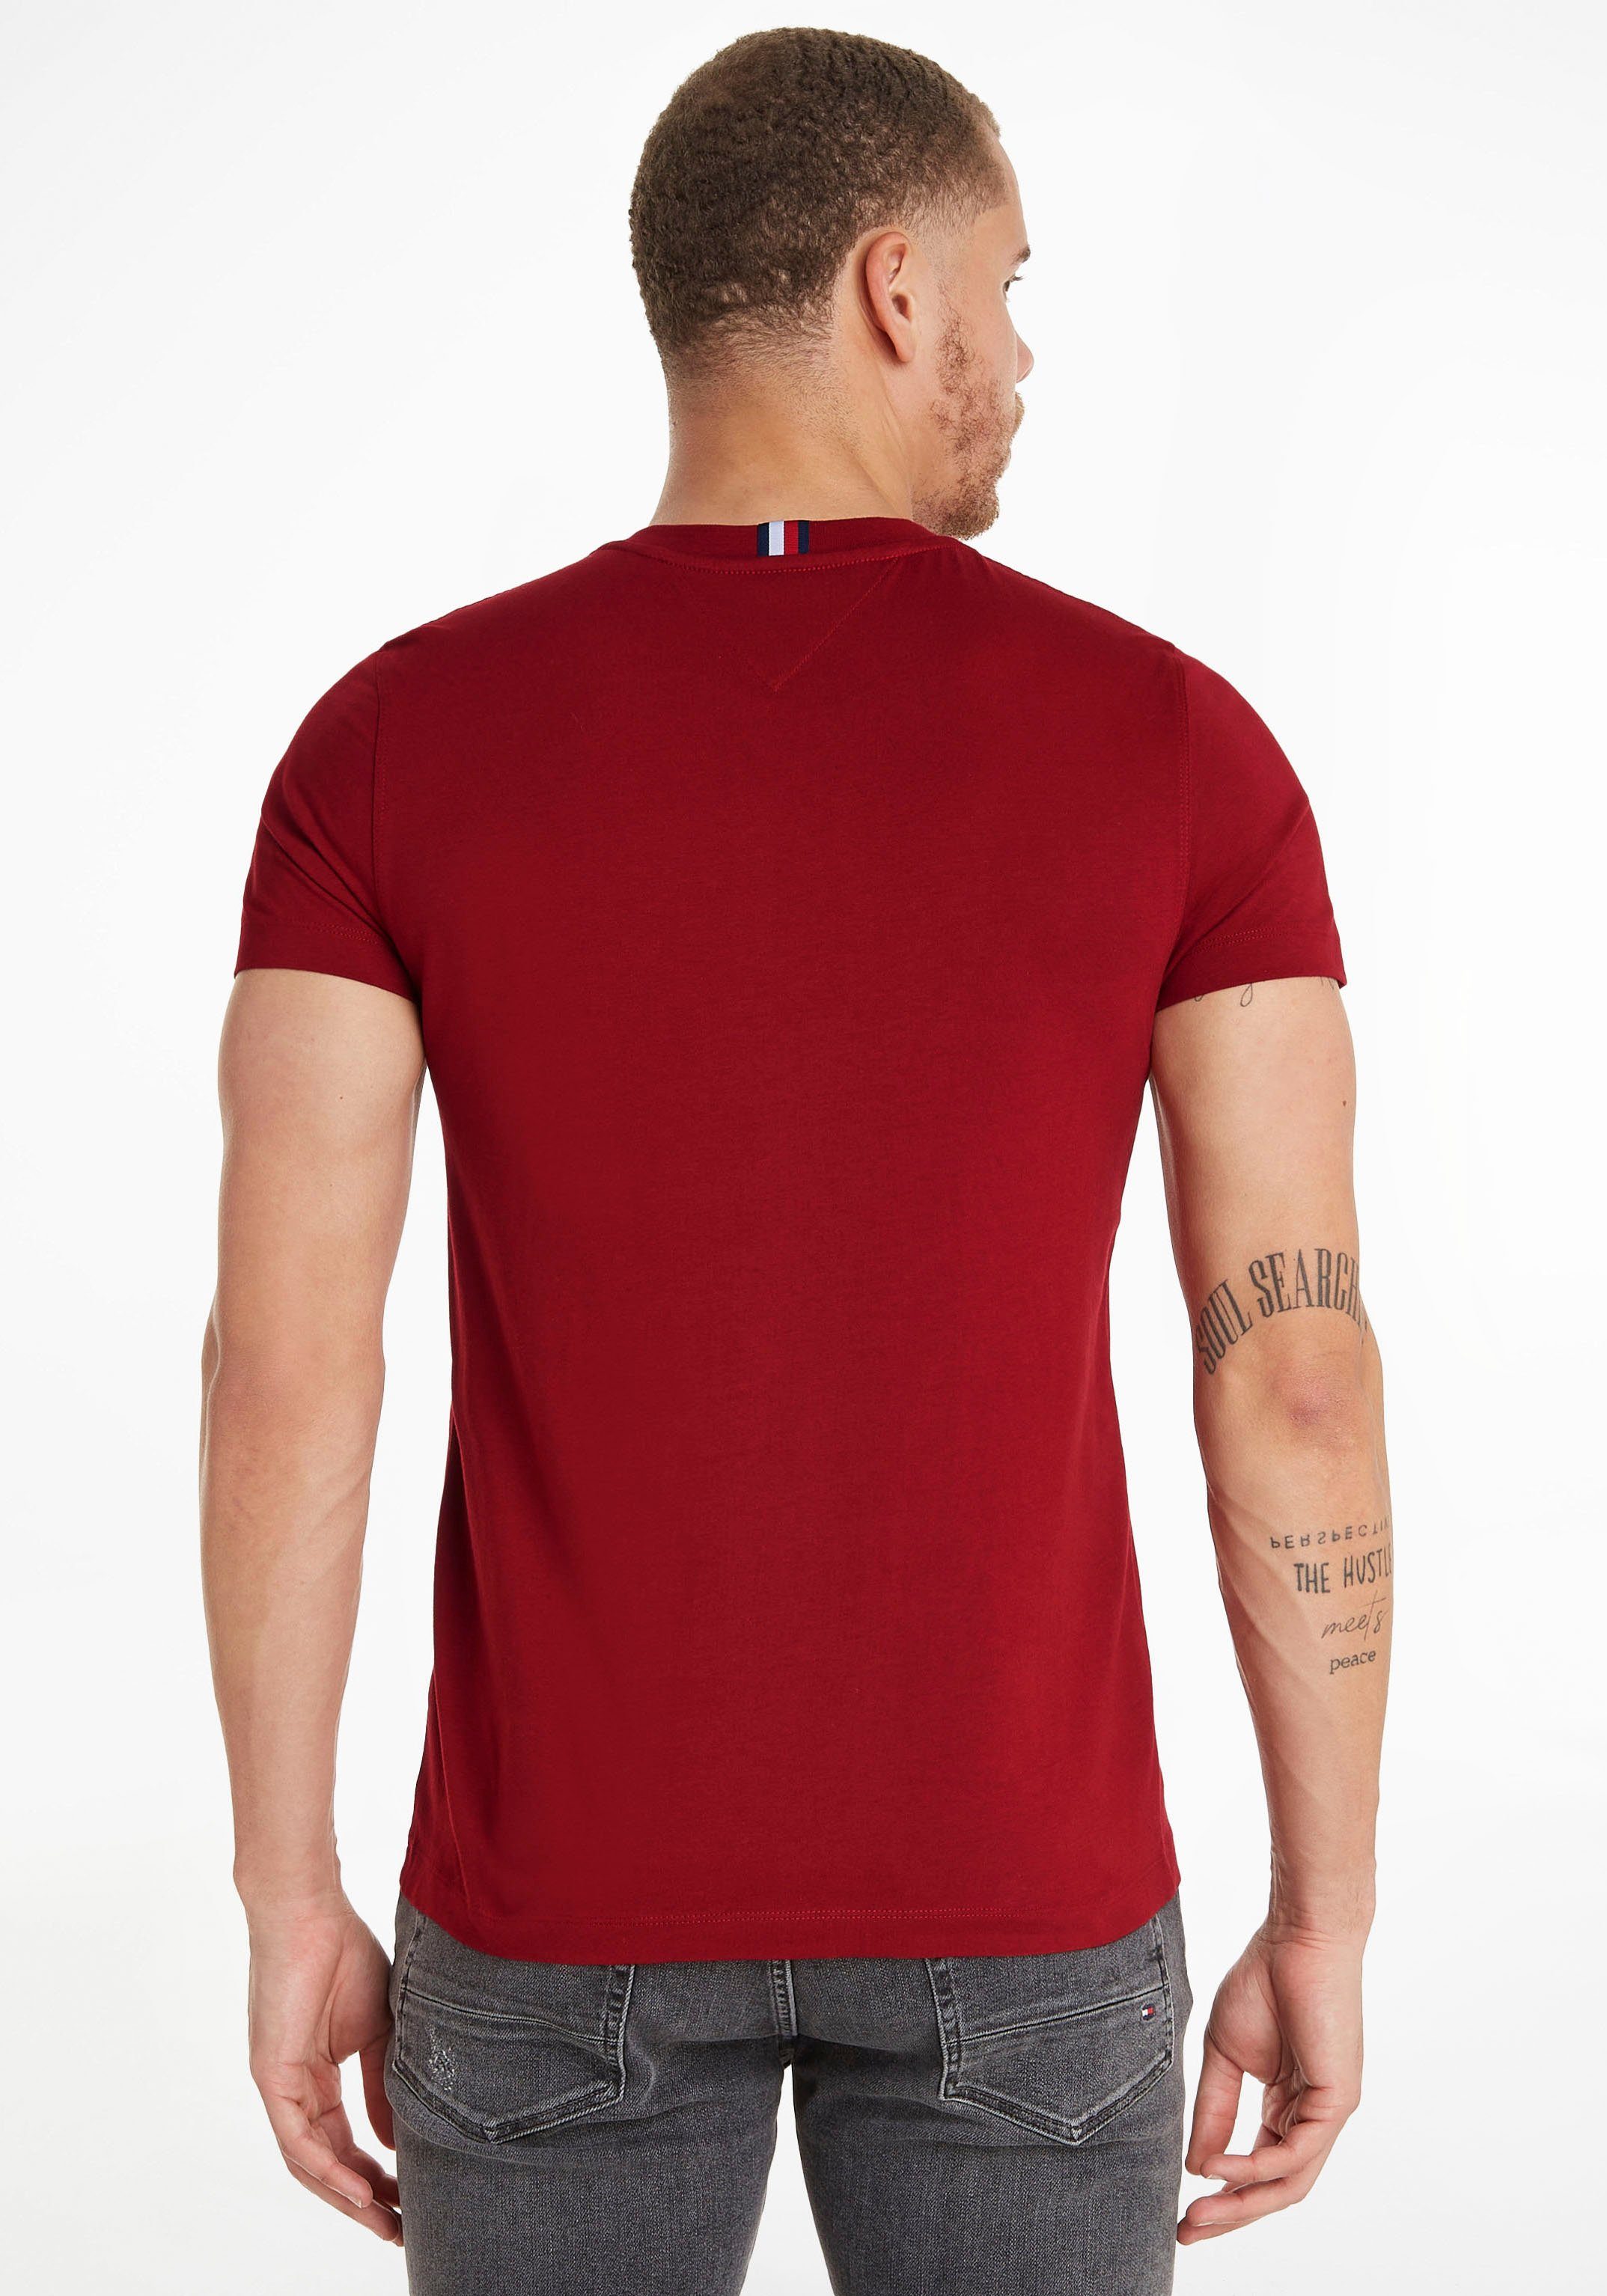 T-Shirt mit inspiriertem Hilfiger DOT Tommy Druck TEE Metro GRAPHIC rot METRO